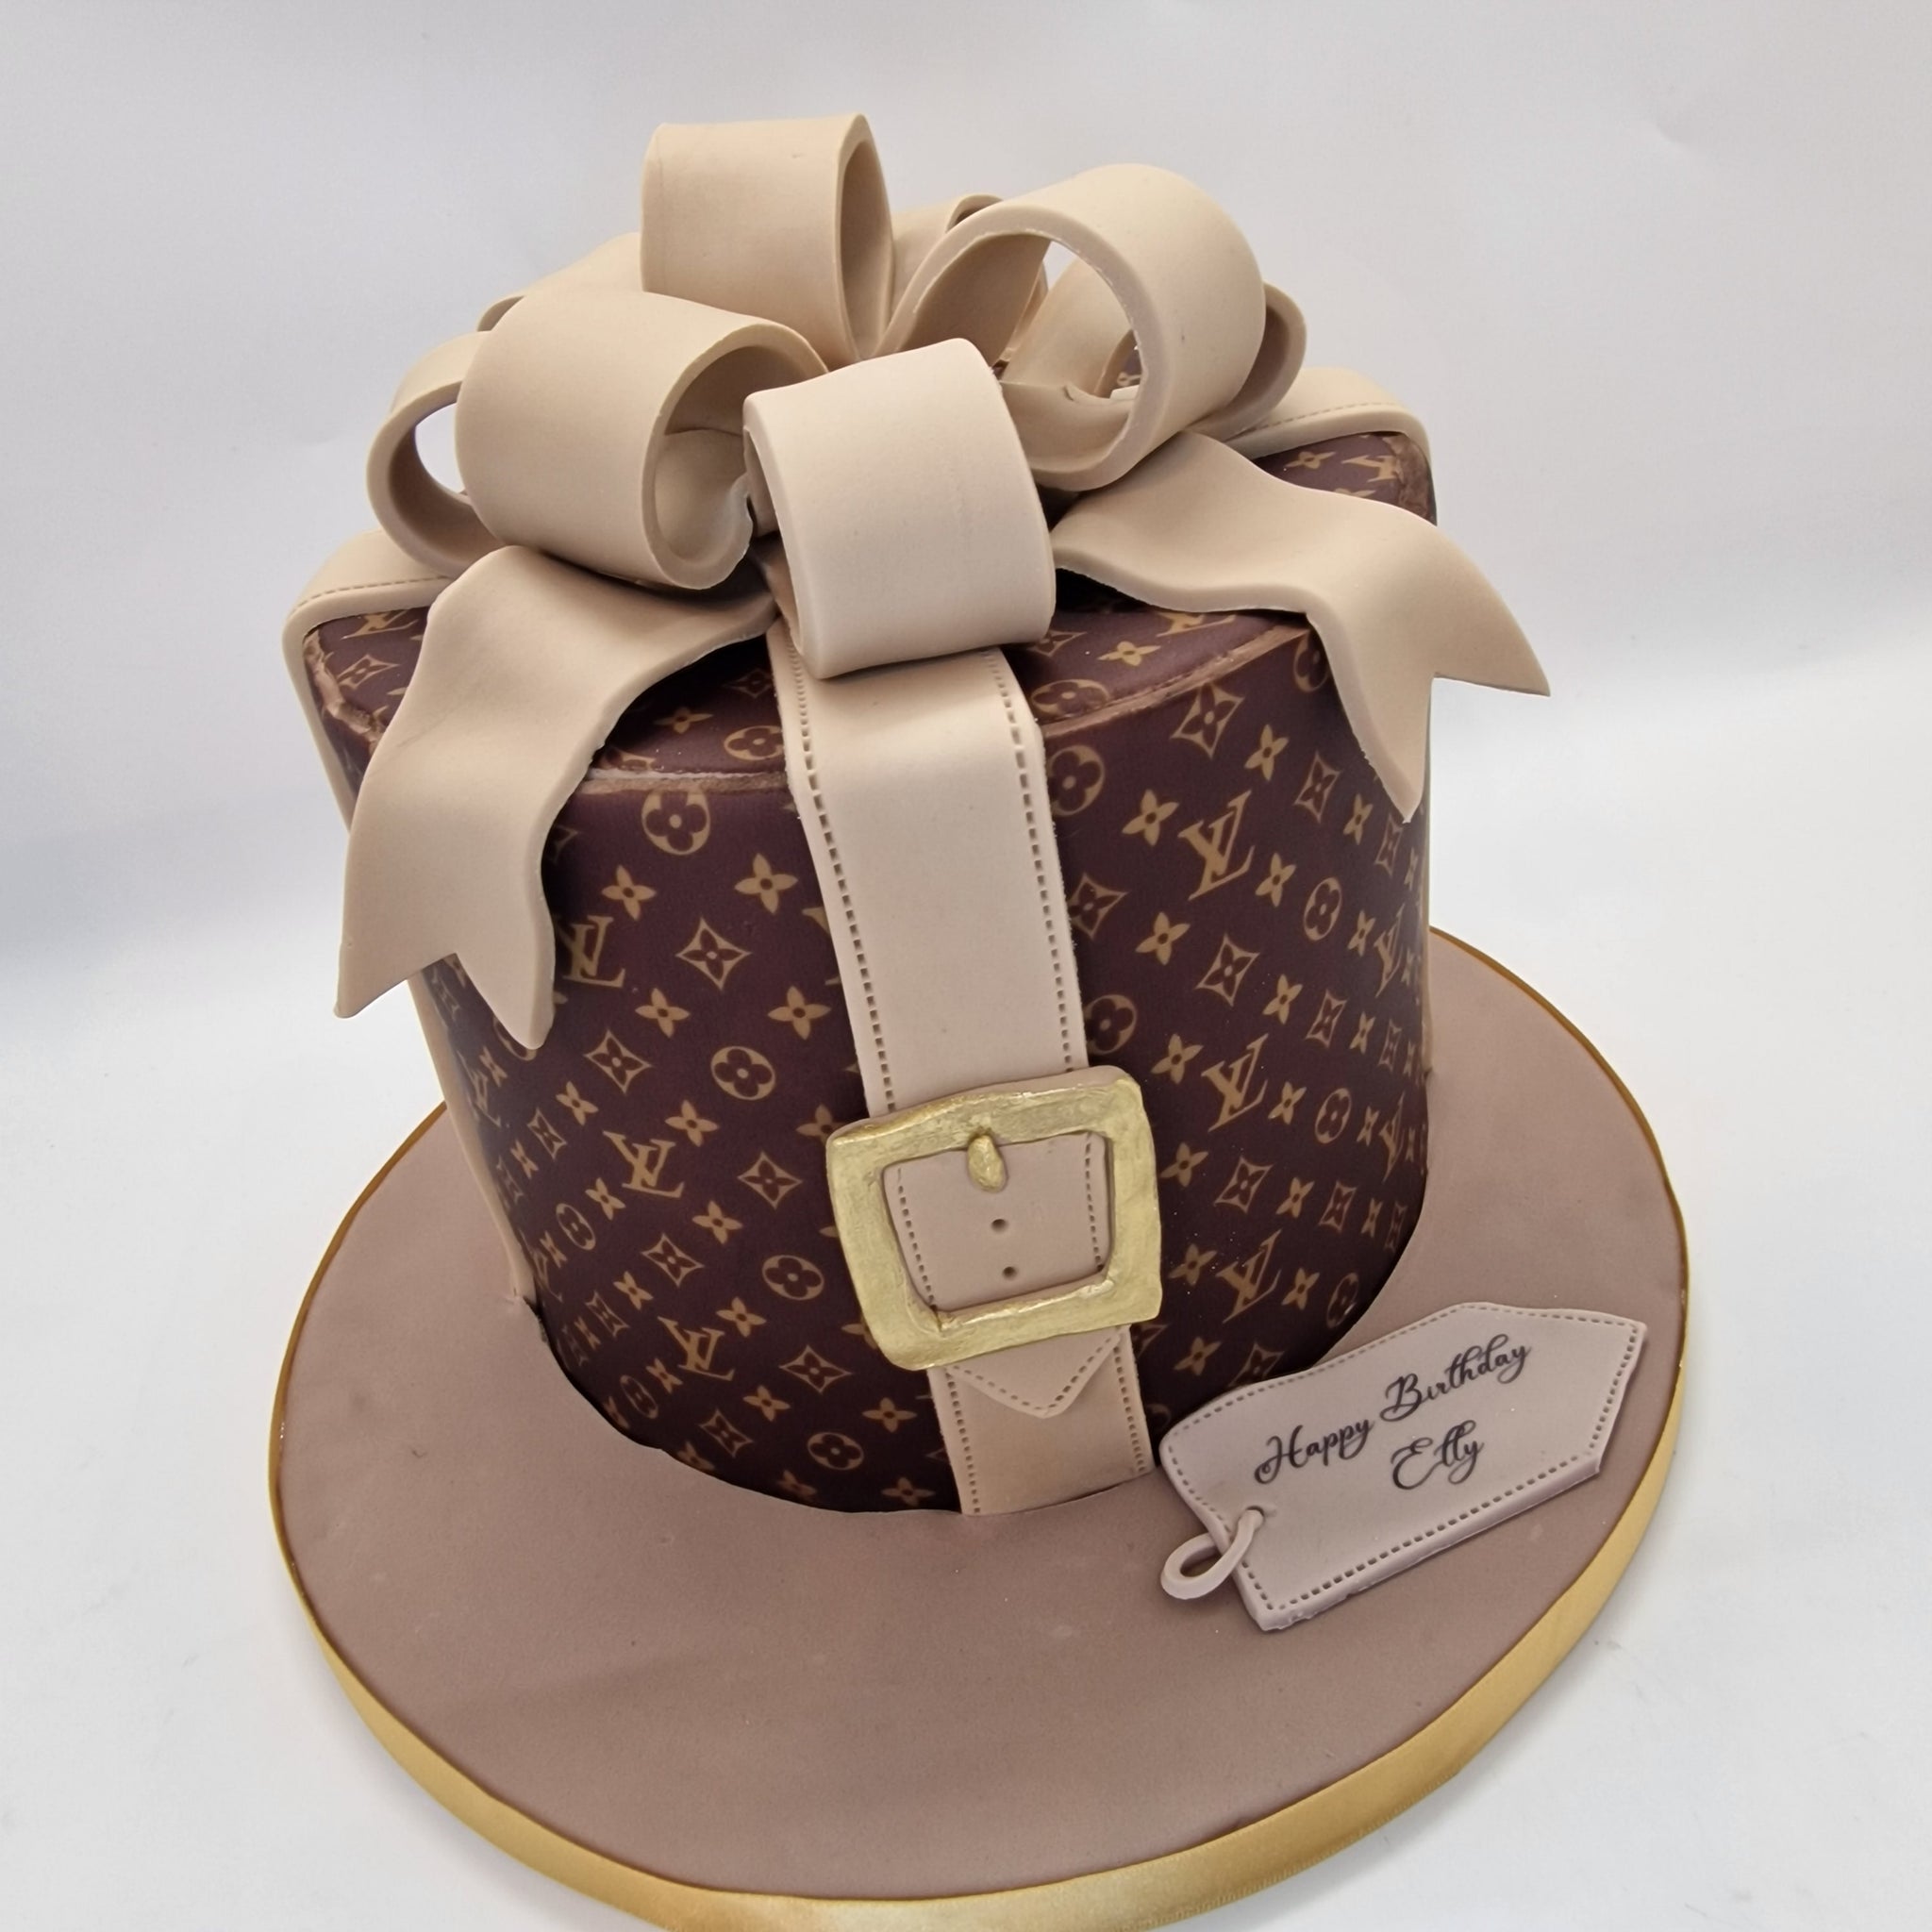 Louis Vuitton single tier cake  Louis vuitton cake, Custom cake